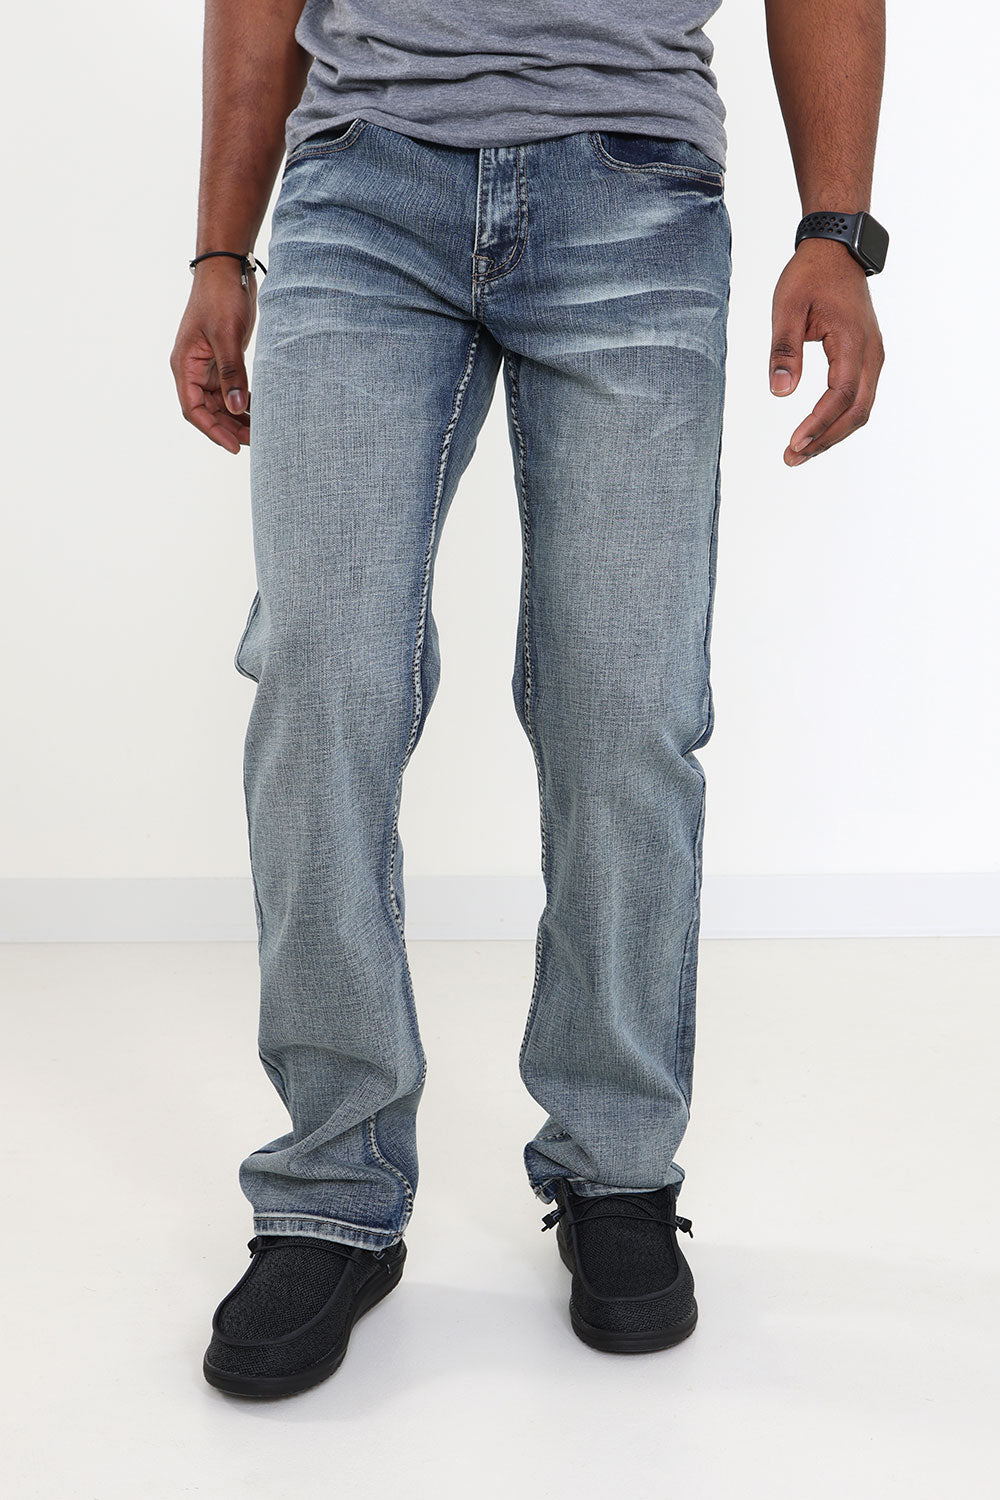 1897 Denim Bootcut Jeans for Men – Glik's